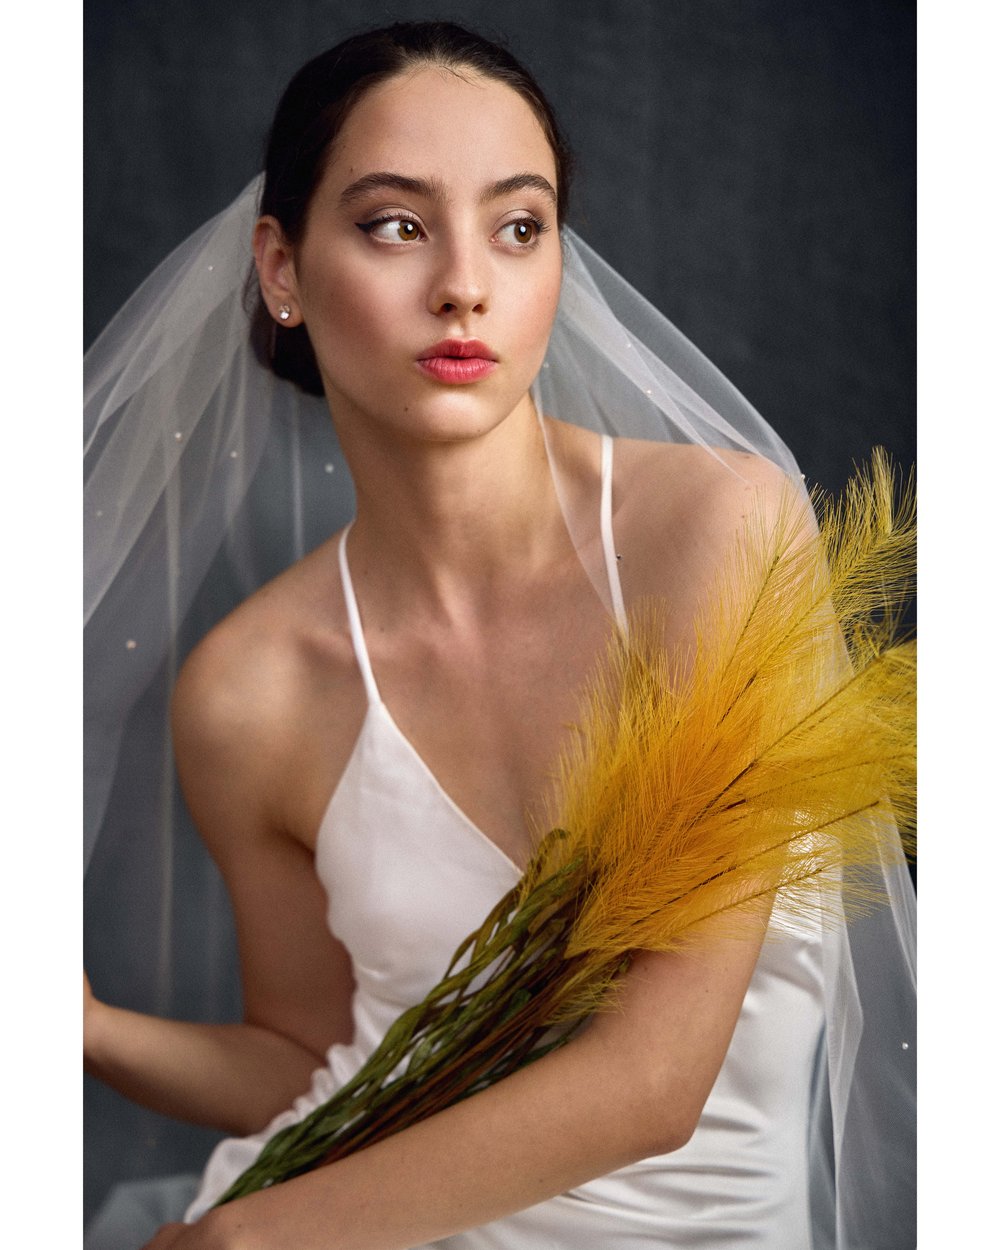 Pearl Bridal Veil, Waltz Lenght One Tier Wedding Veil with Pearls – Pet-Jos  Bridal